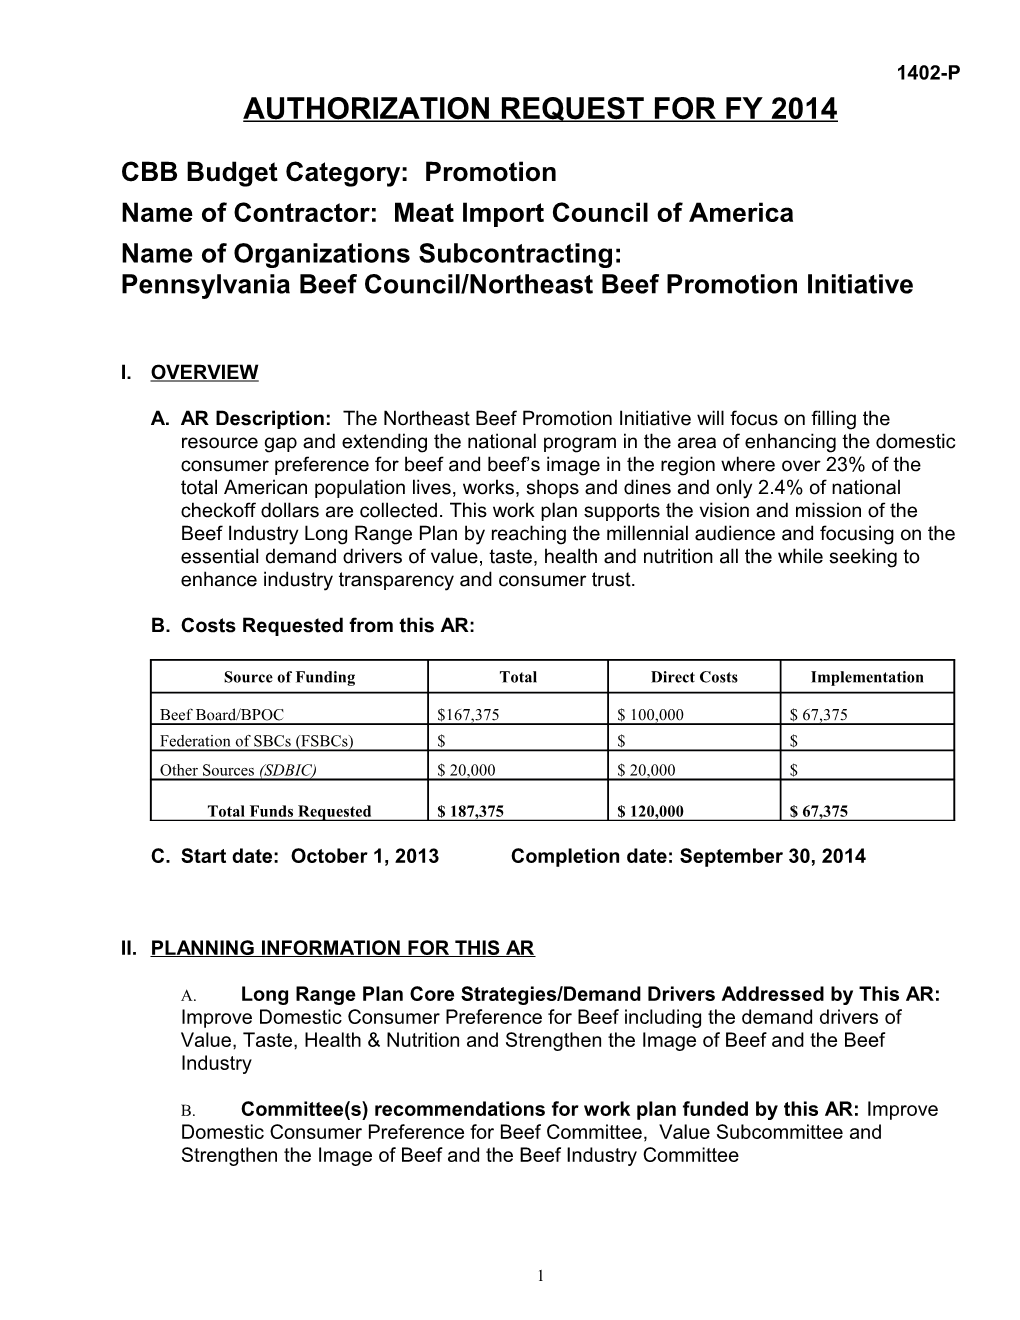 CBB Budget Category: Promotion